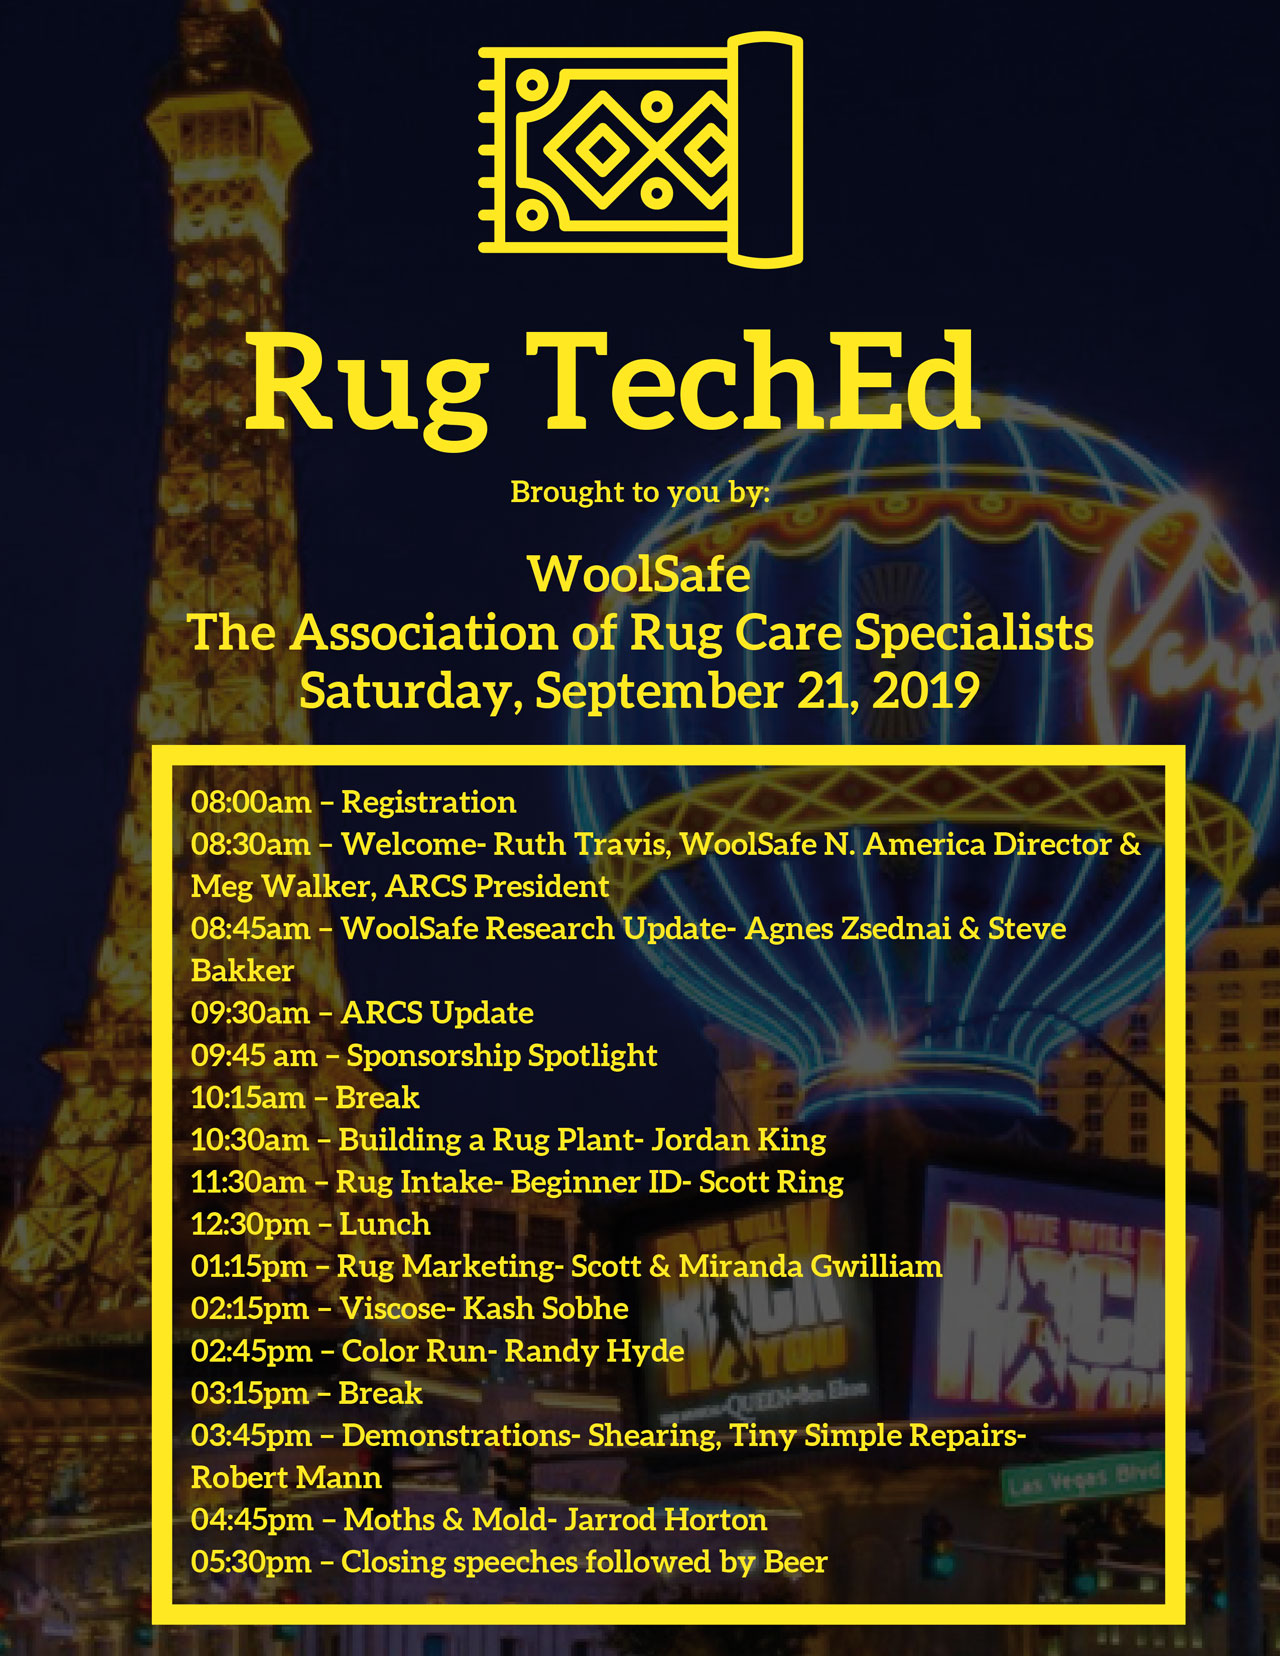 Rug-TechEd-Schedule2.jpg